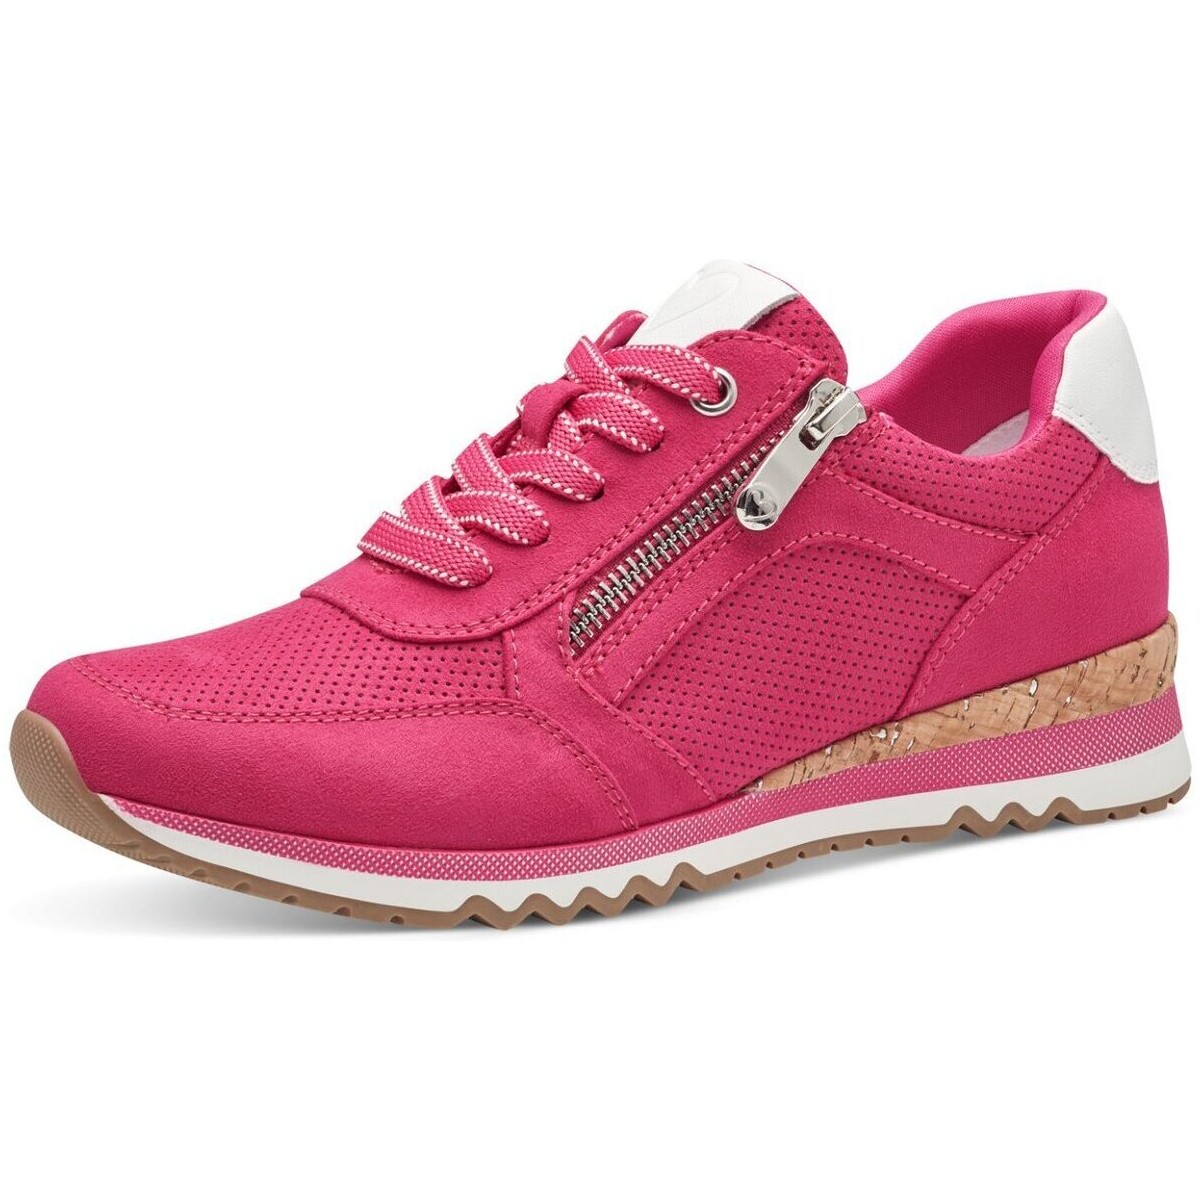 Schuhe Damen Sneaker Marco Tozzi Pink Comb 2-23781-41/514 514 Other